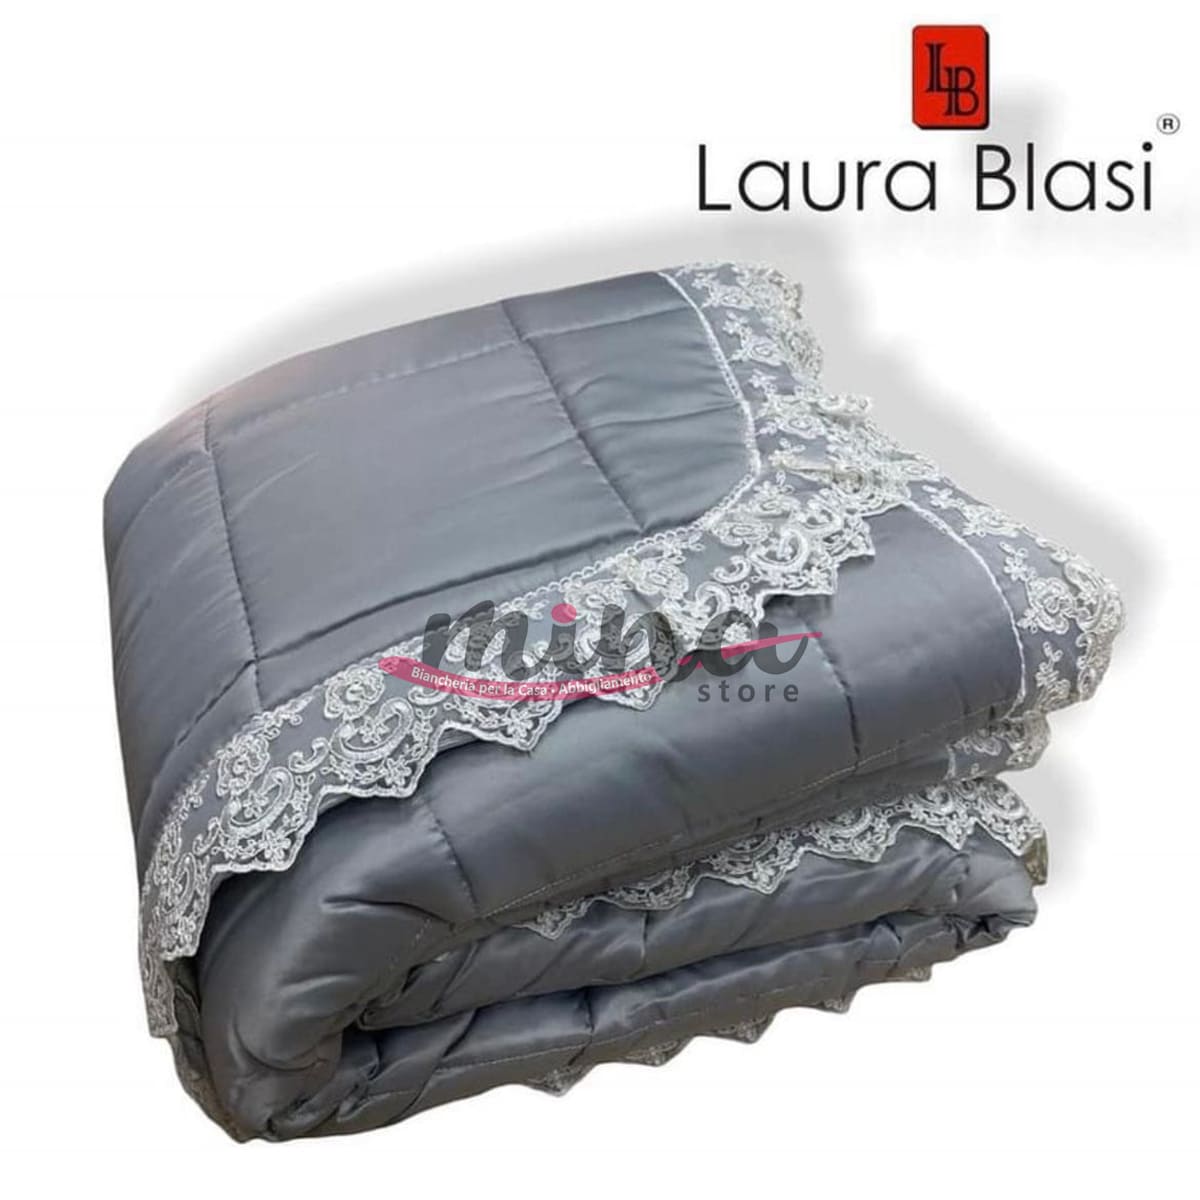 Trapunta invernale Matrimoniale Laura Blasi modello LOVE GRIGIO 100% Made in Italy Qualità Premium 0917